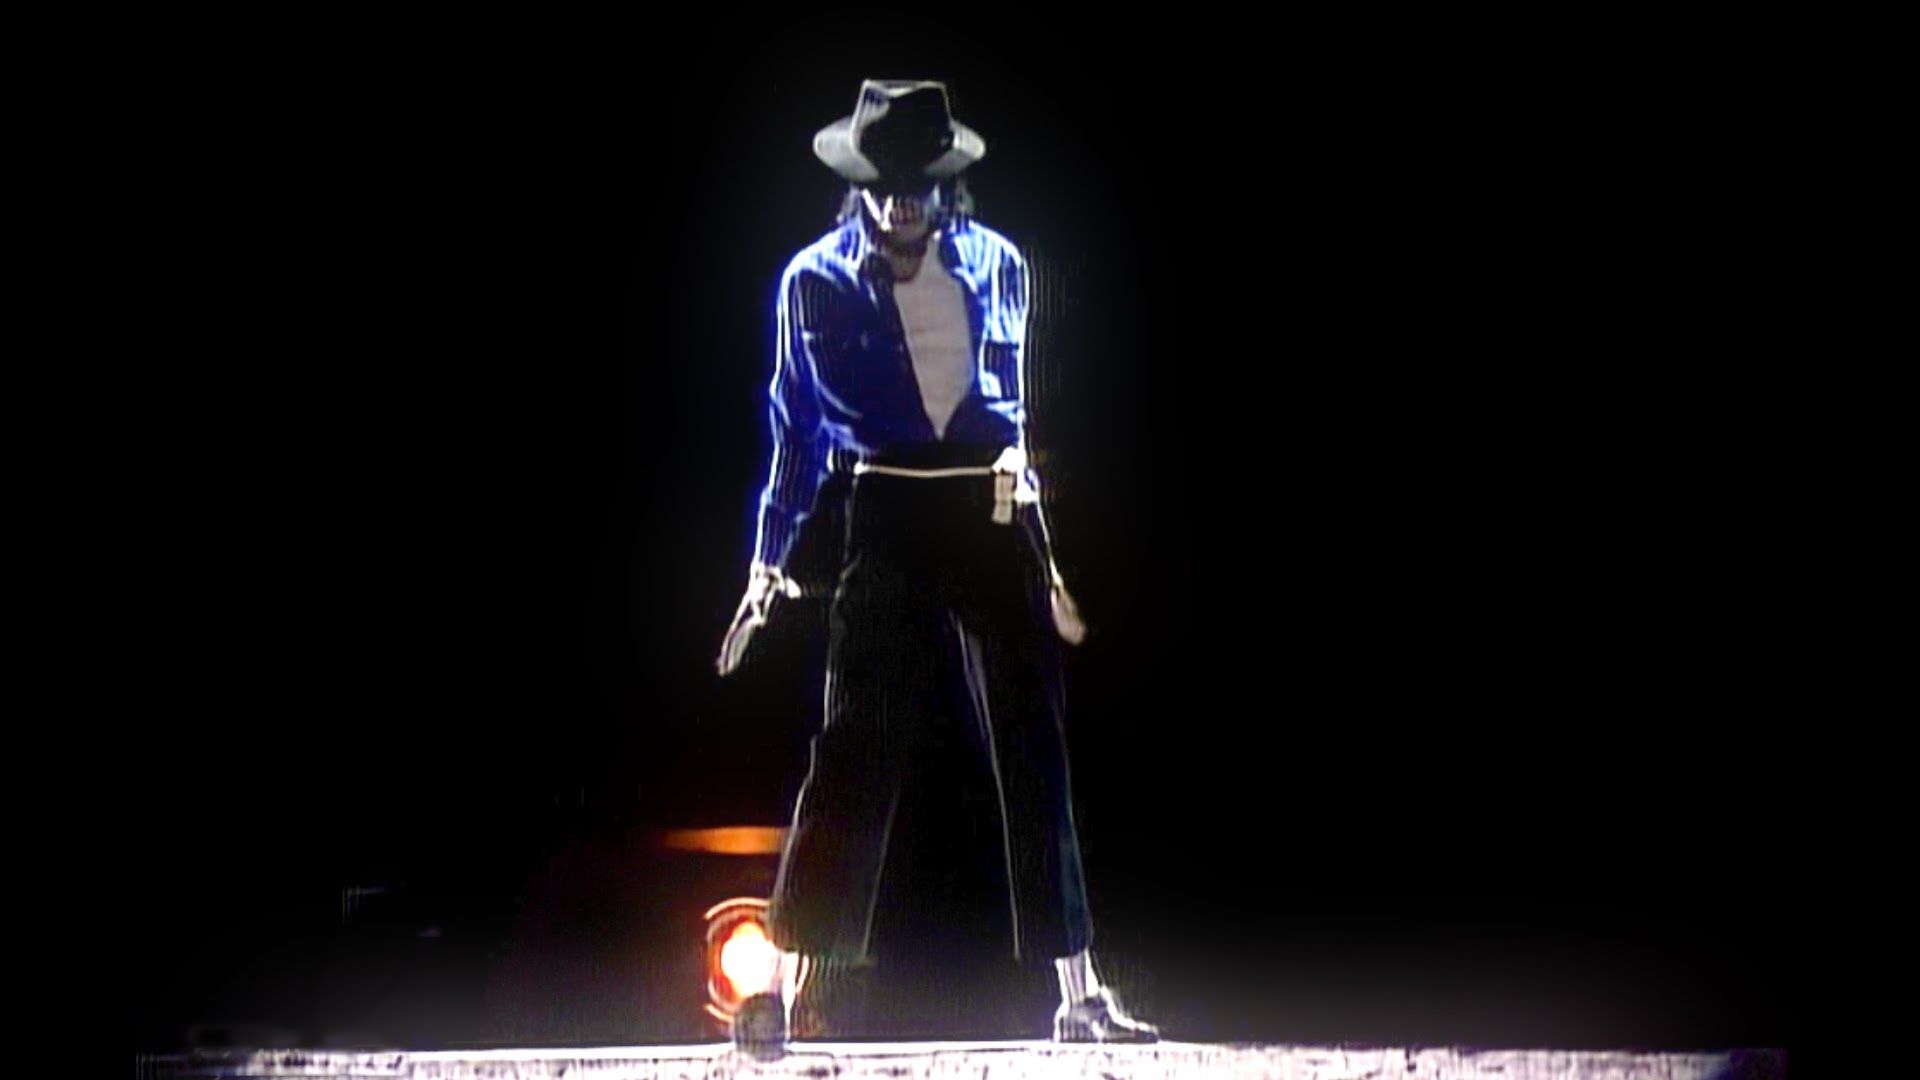 DANGEROUS~ - Michael Jackson Wallpaper (22555319) - Fanpop